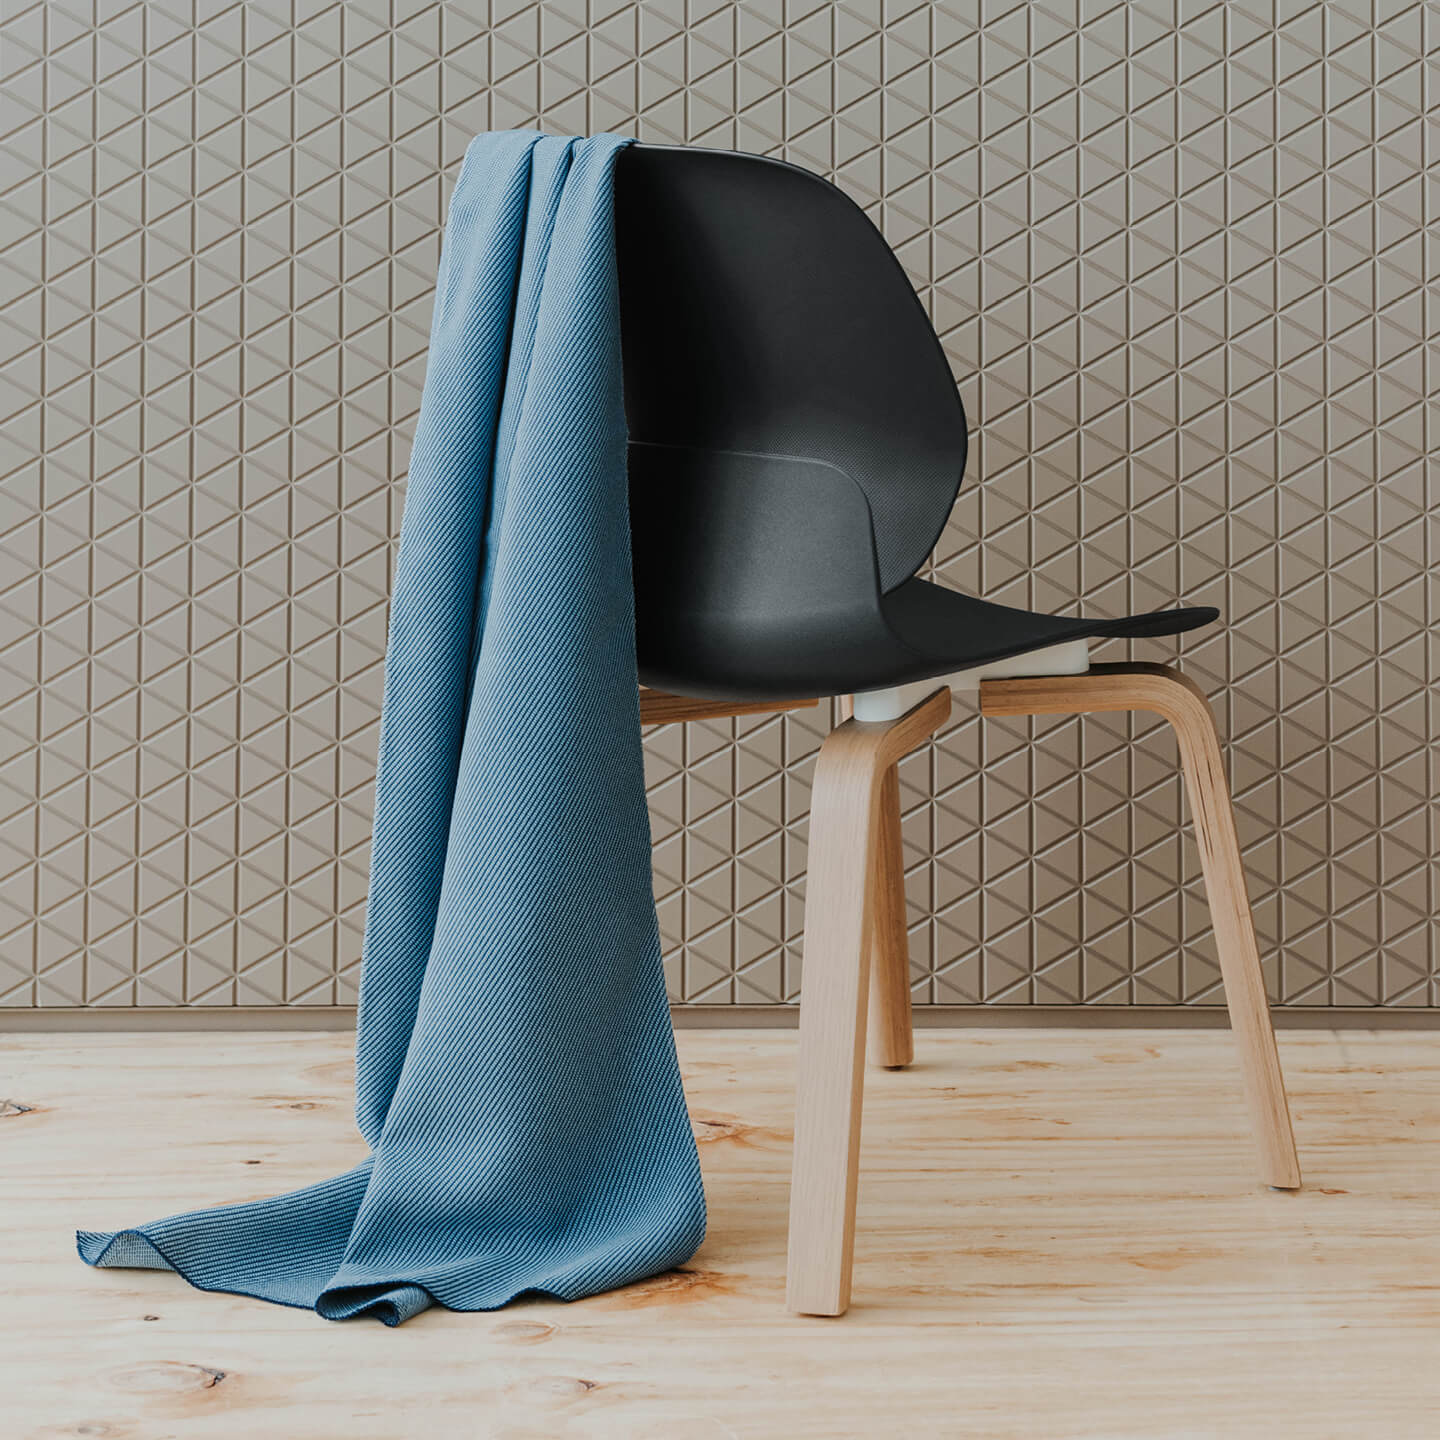 Haworth Oceanic fabric in blue handing over a Maari chair